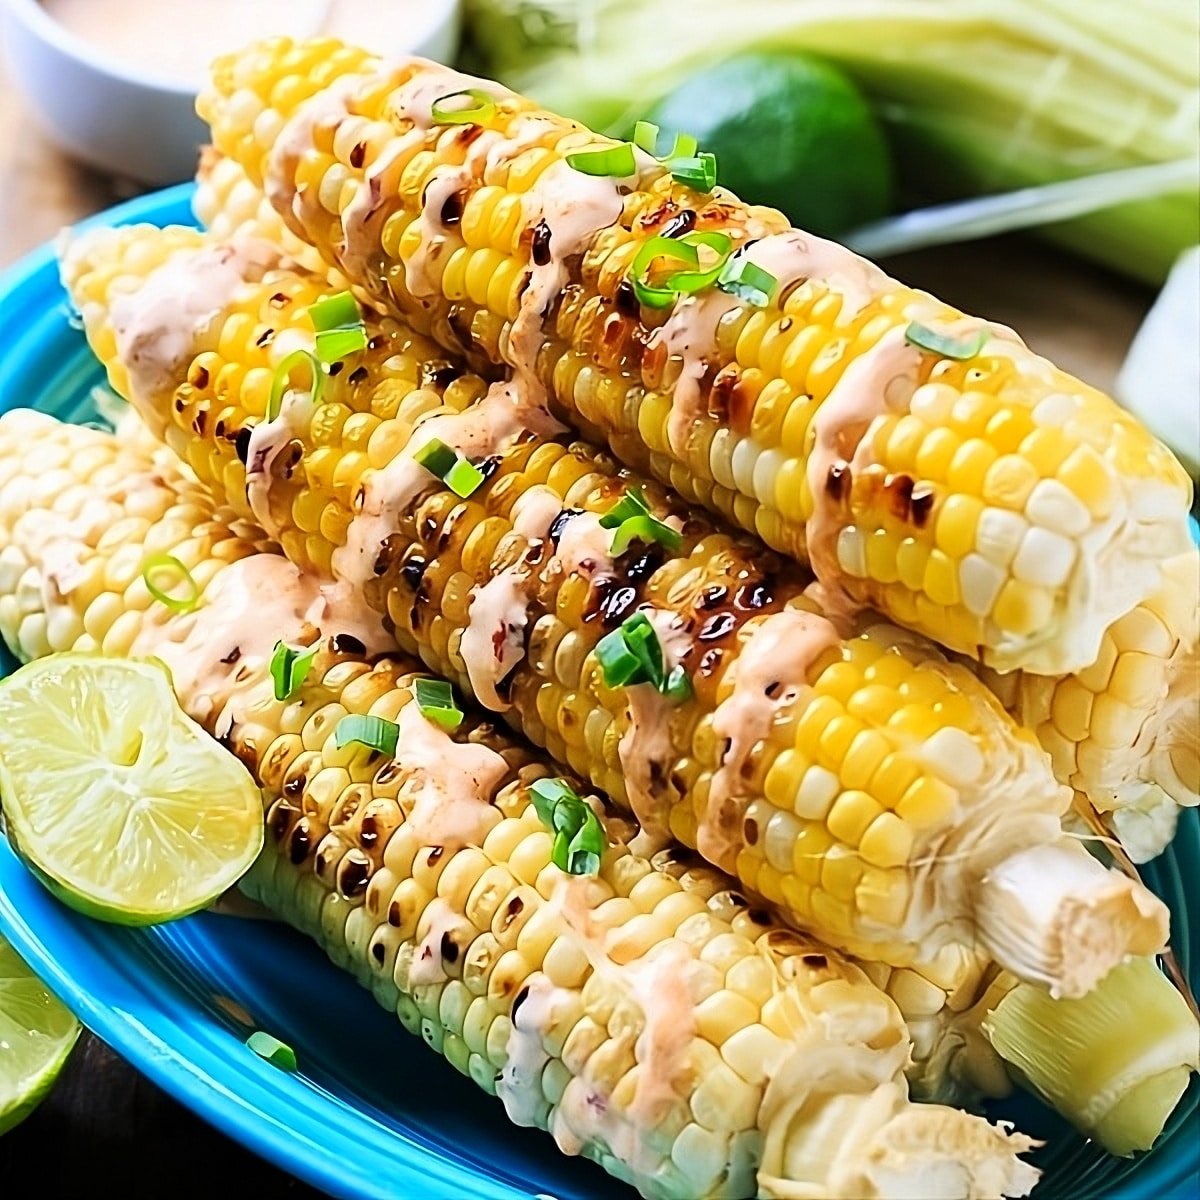 Grilled Corn on a serving platter.